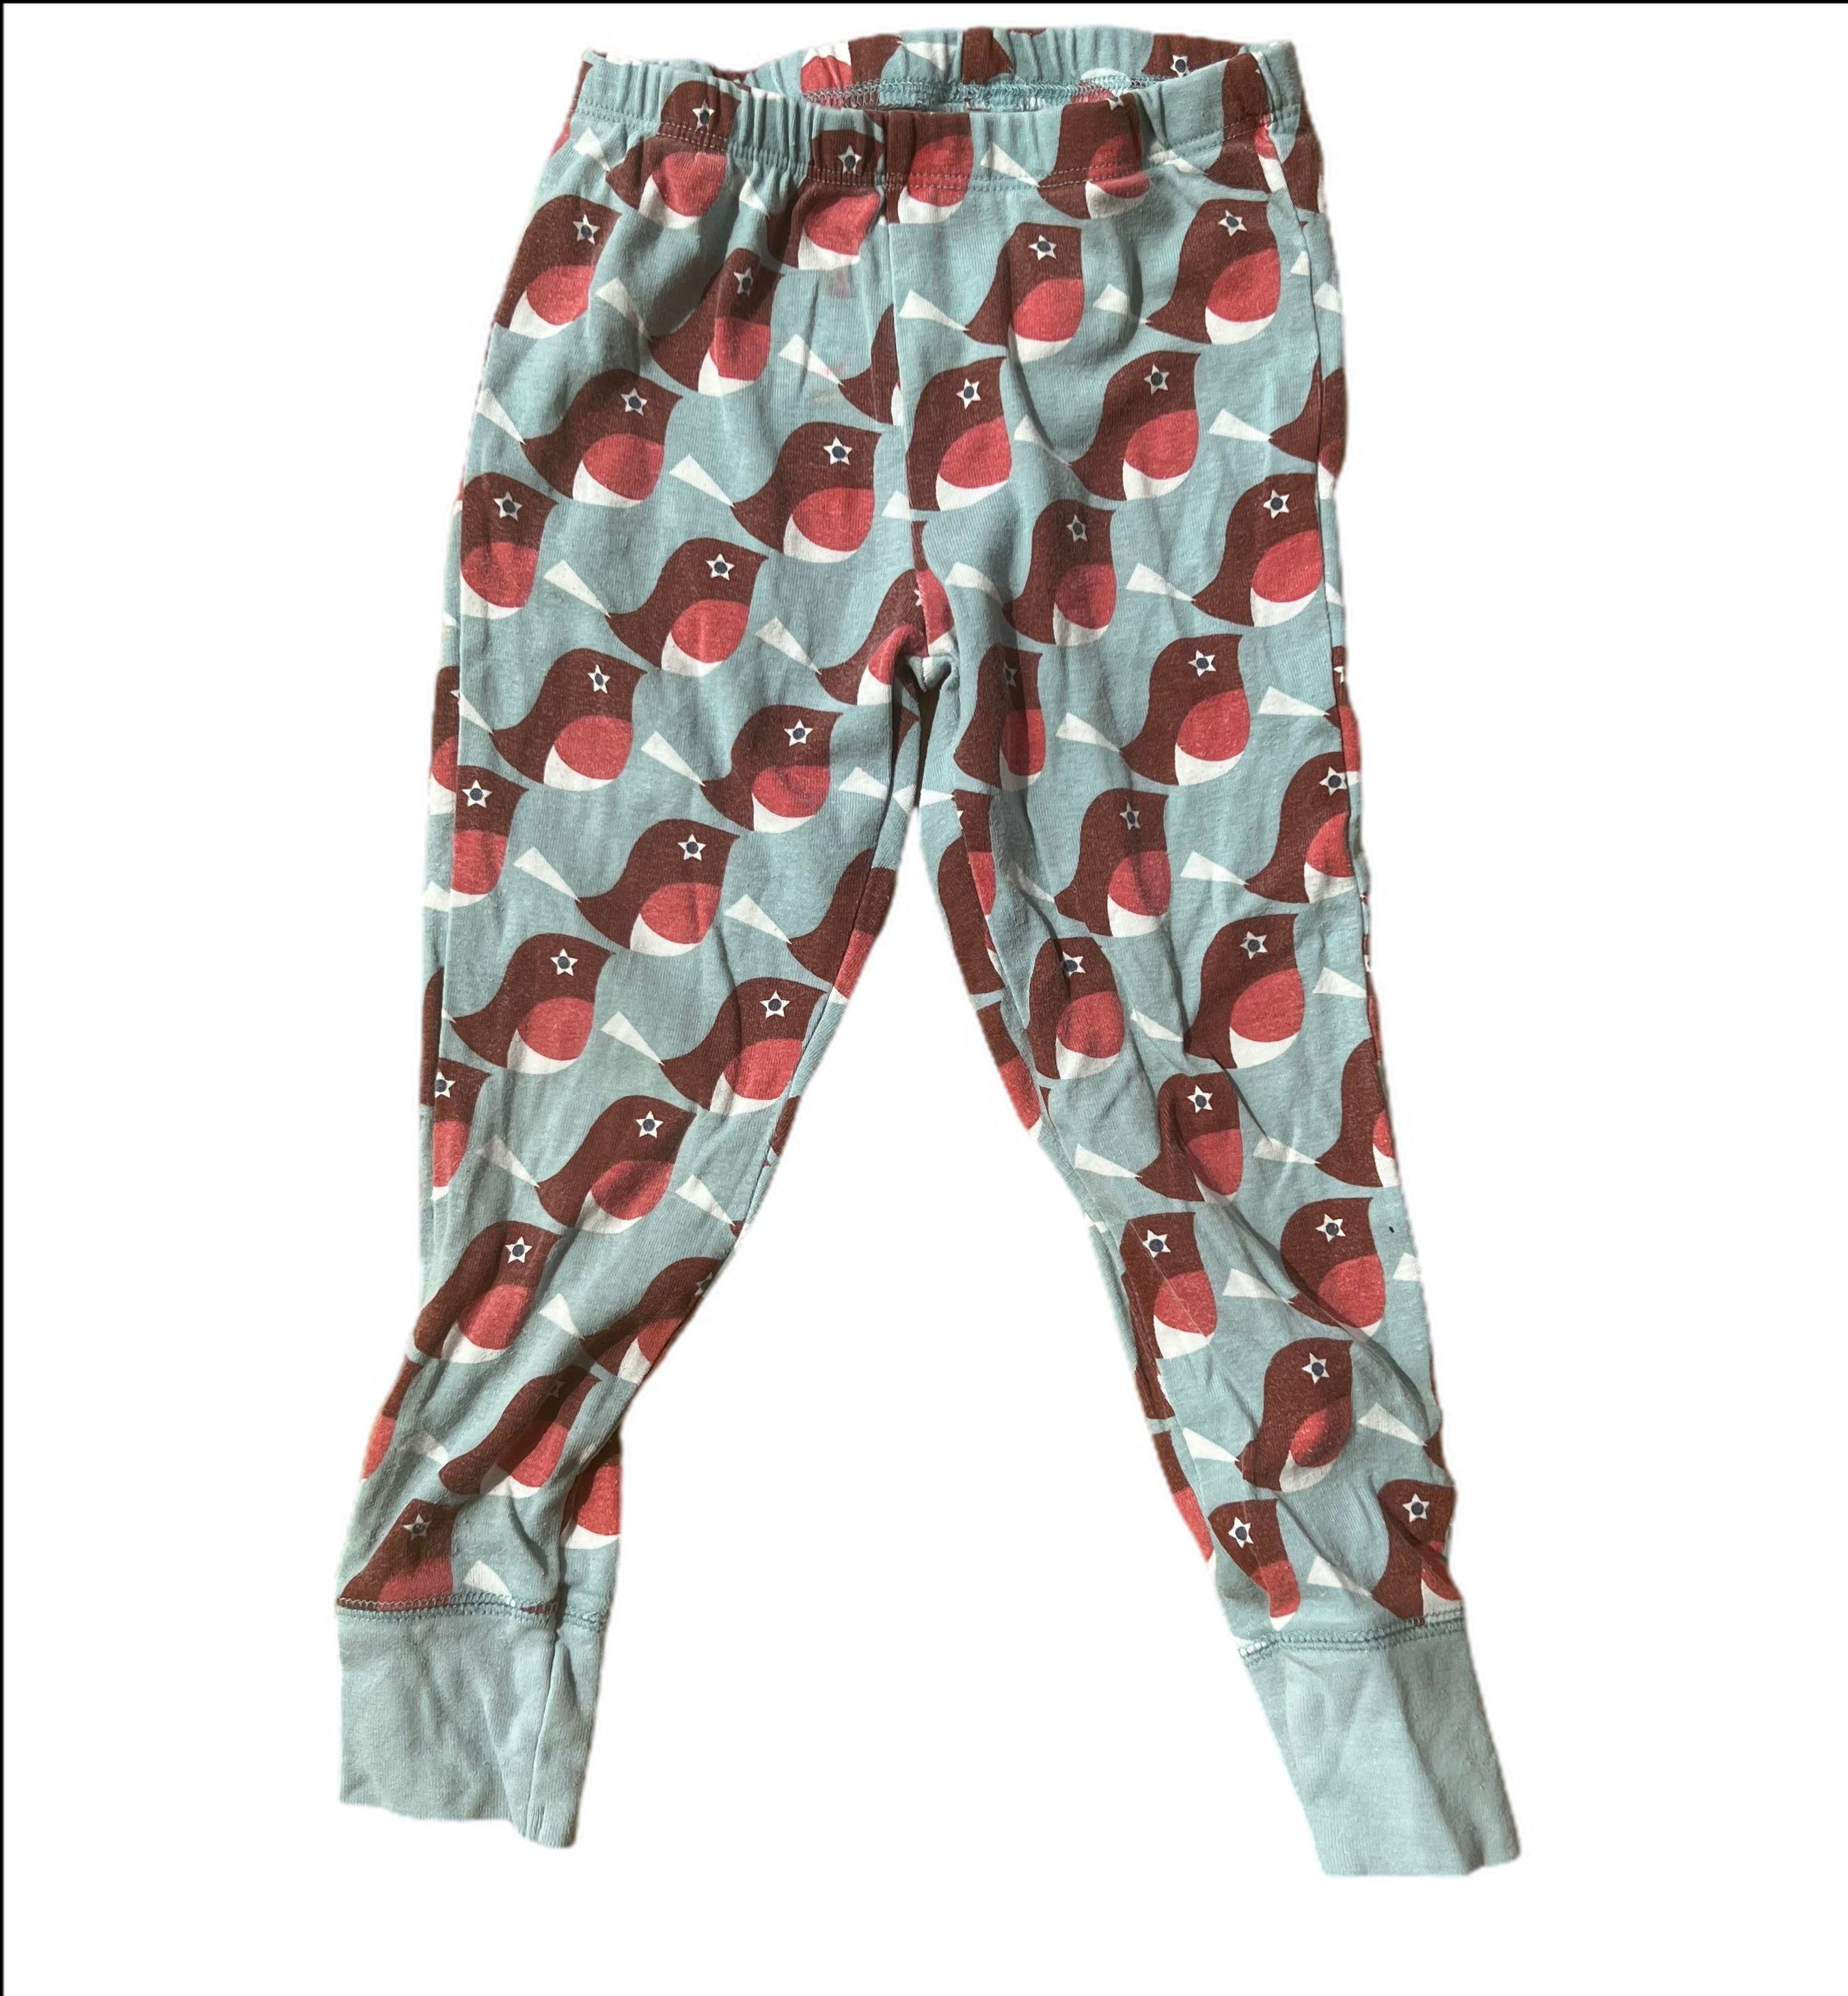 Long sleeve robin print pajamas small mark on bottoms just under waistband